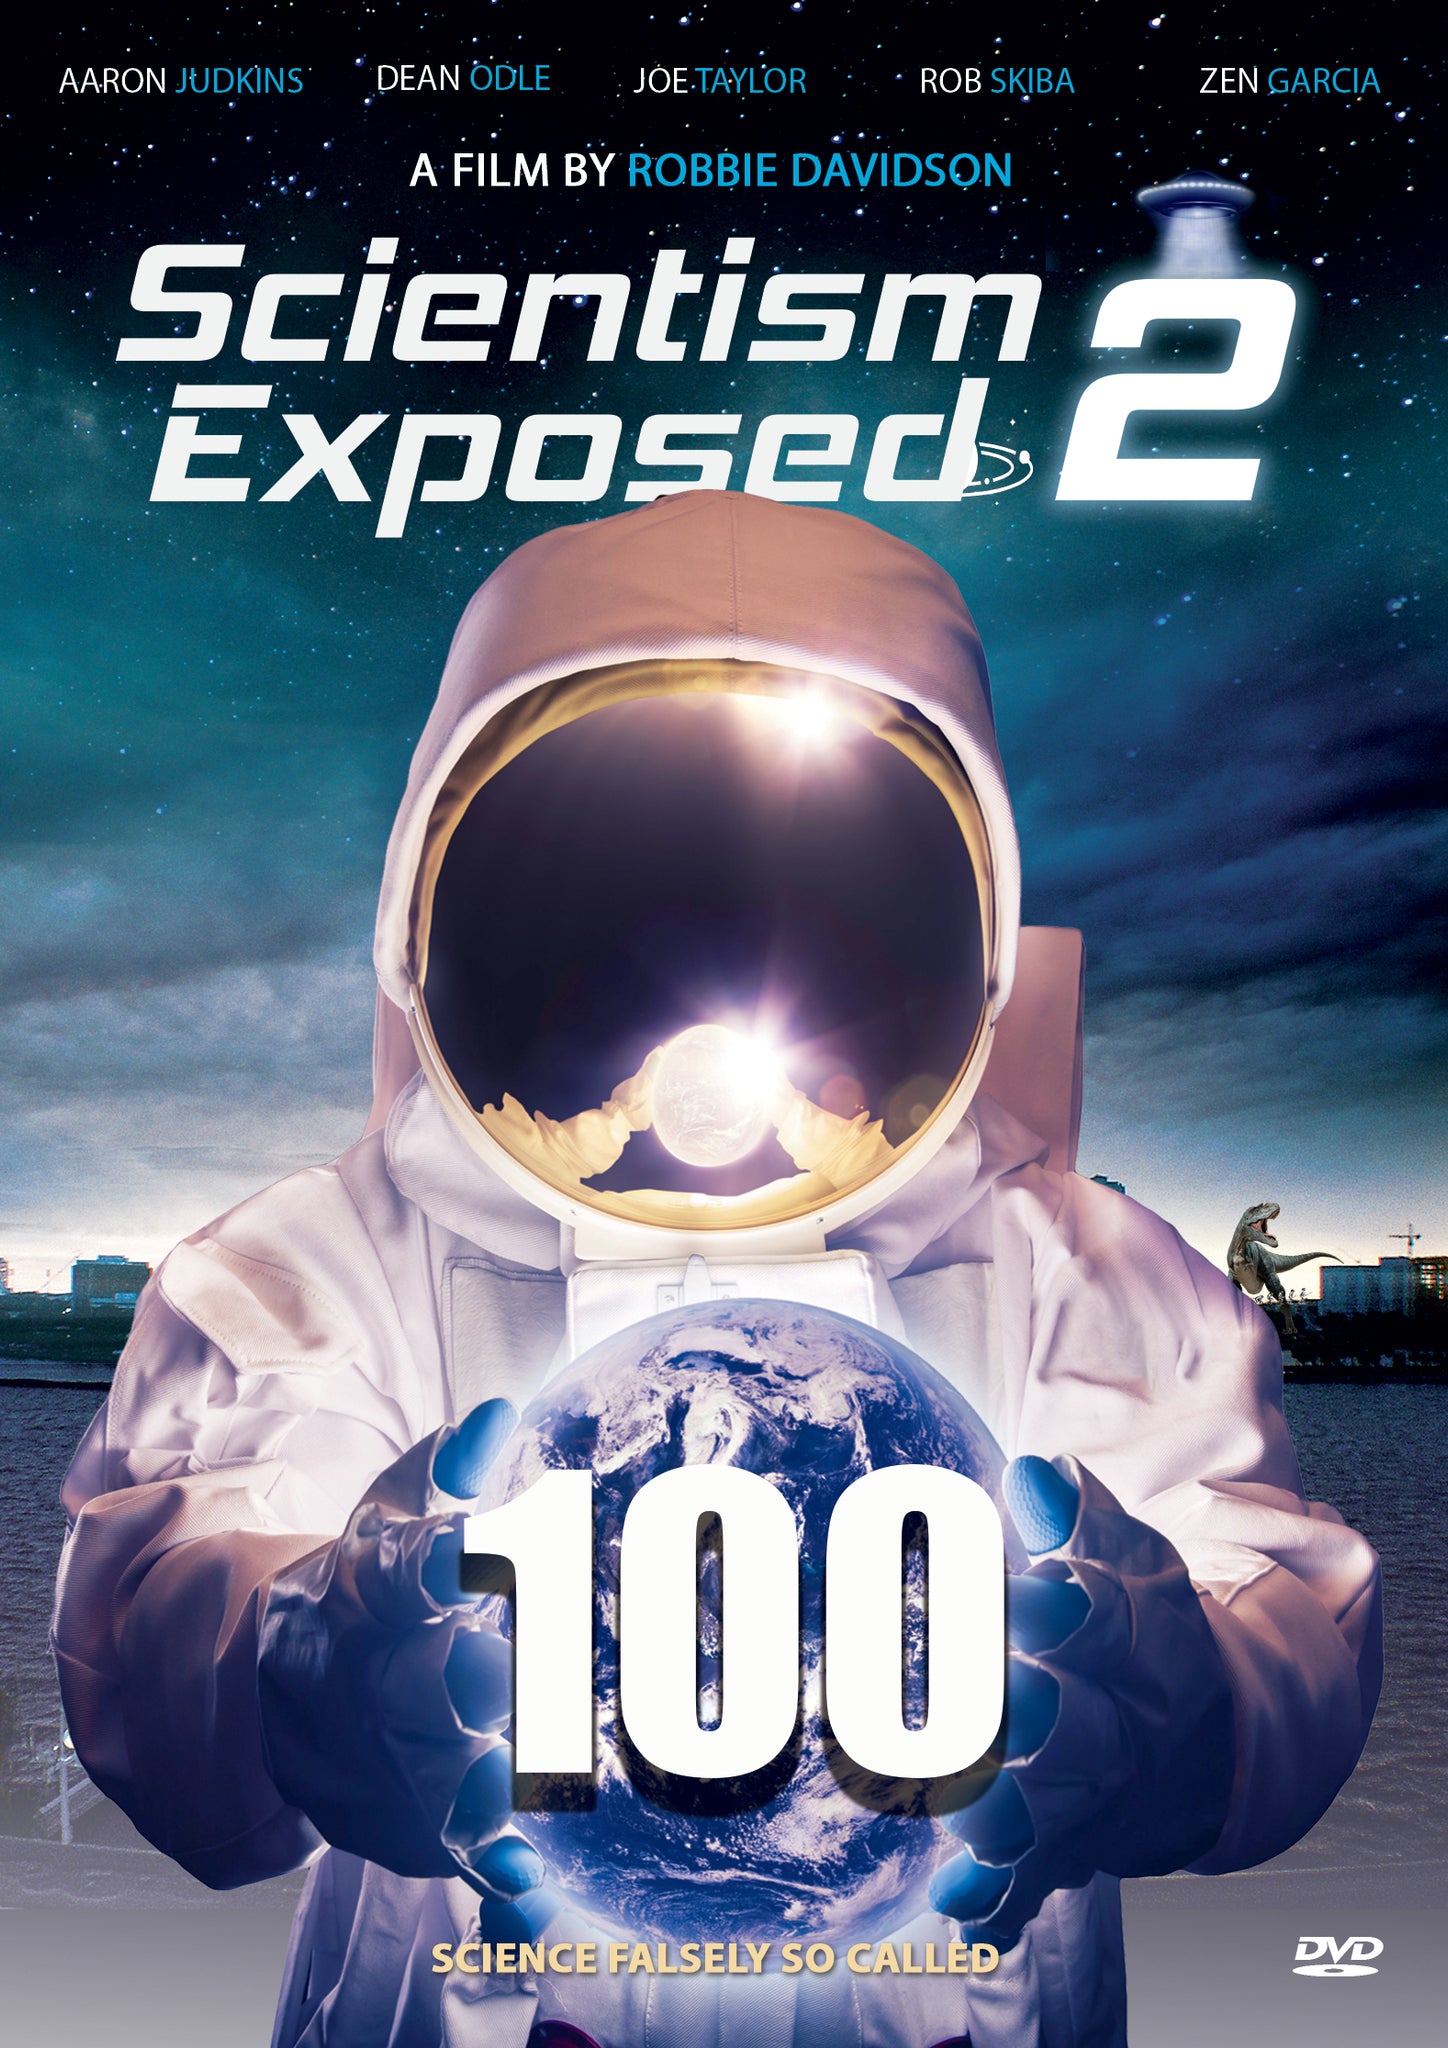 Scientism Exposed 2 DVD - Bulk Order of 100